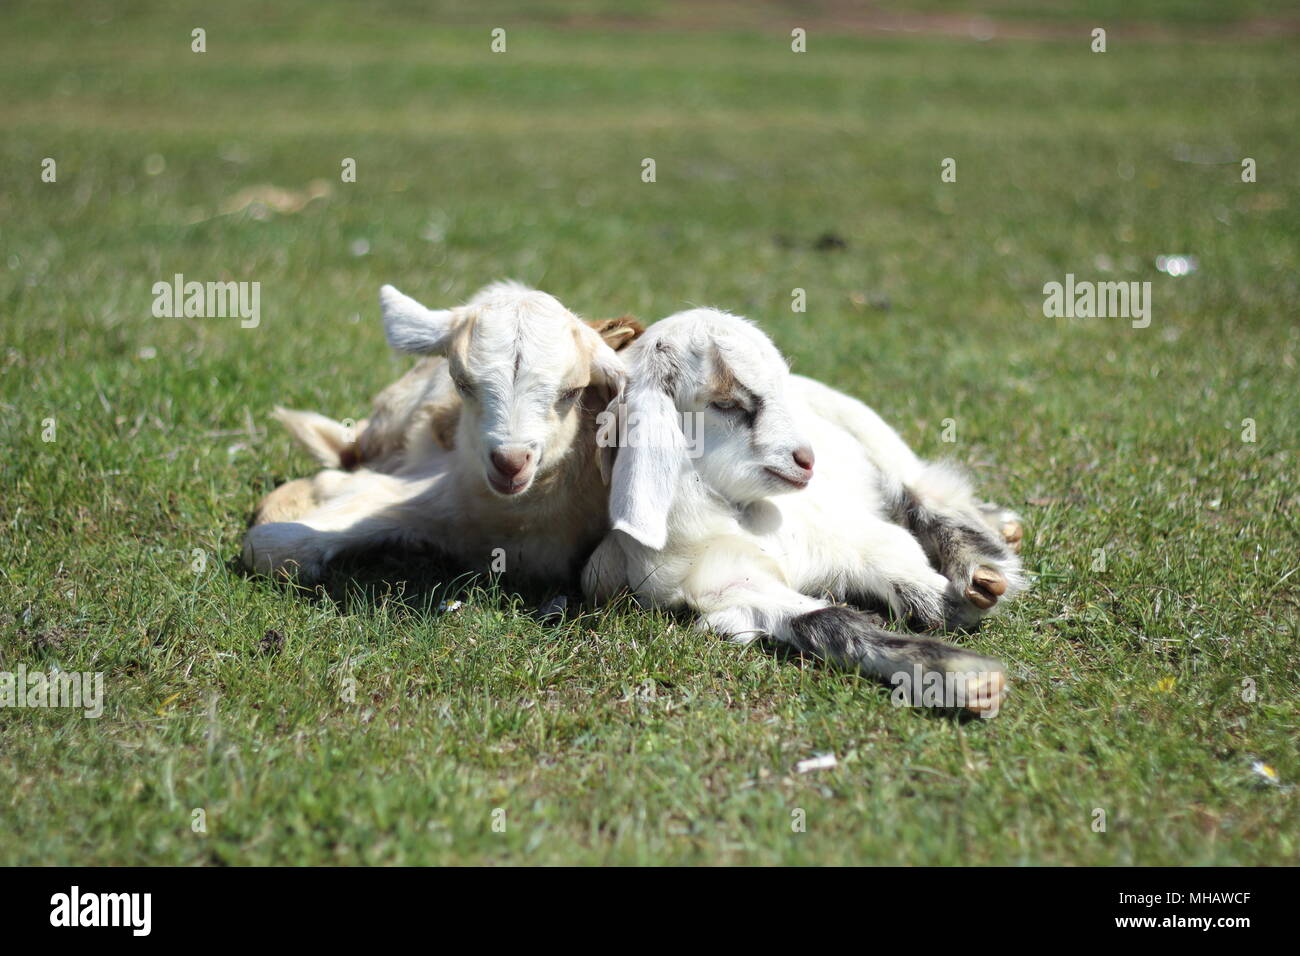 Sleeping goats Stock Photo